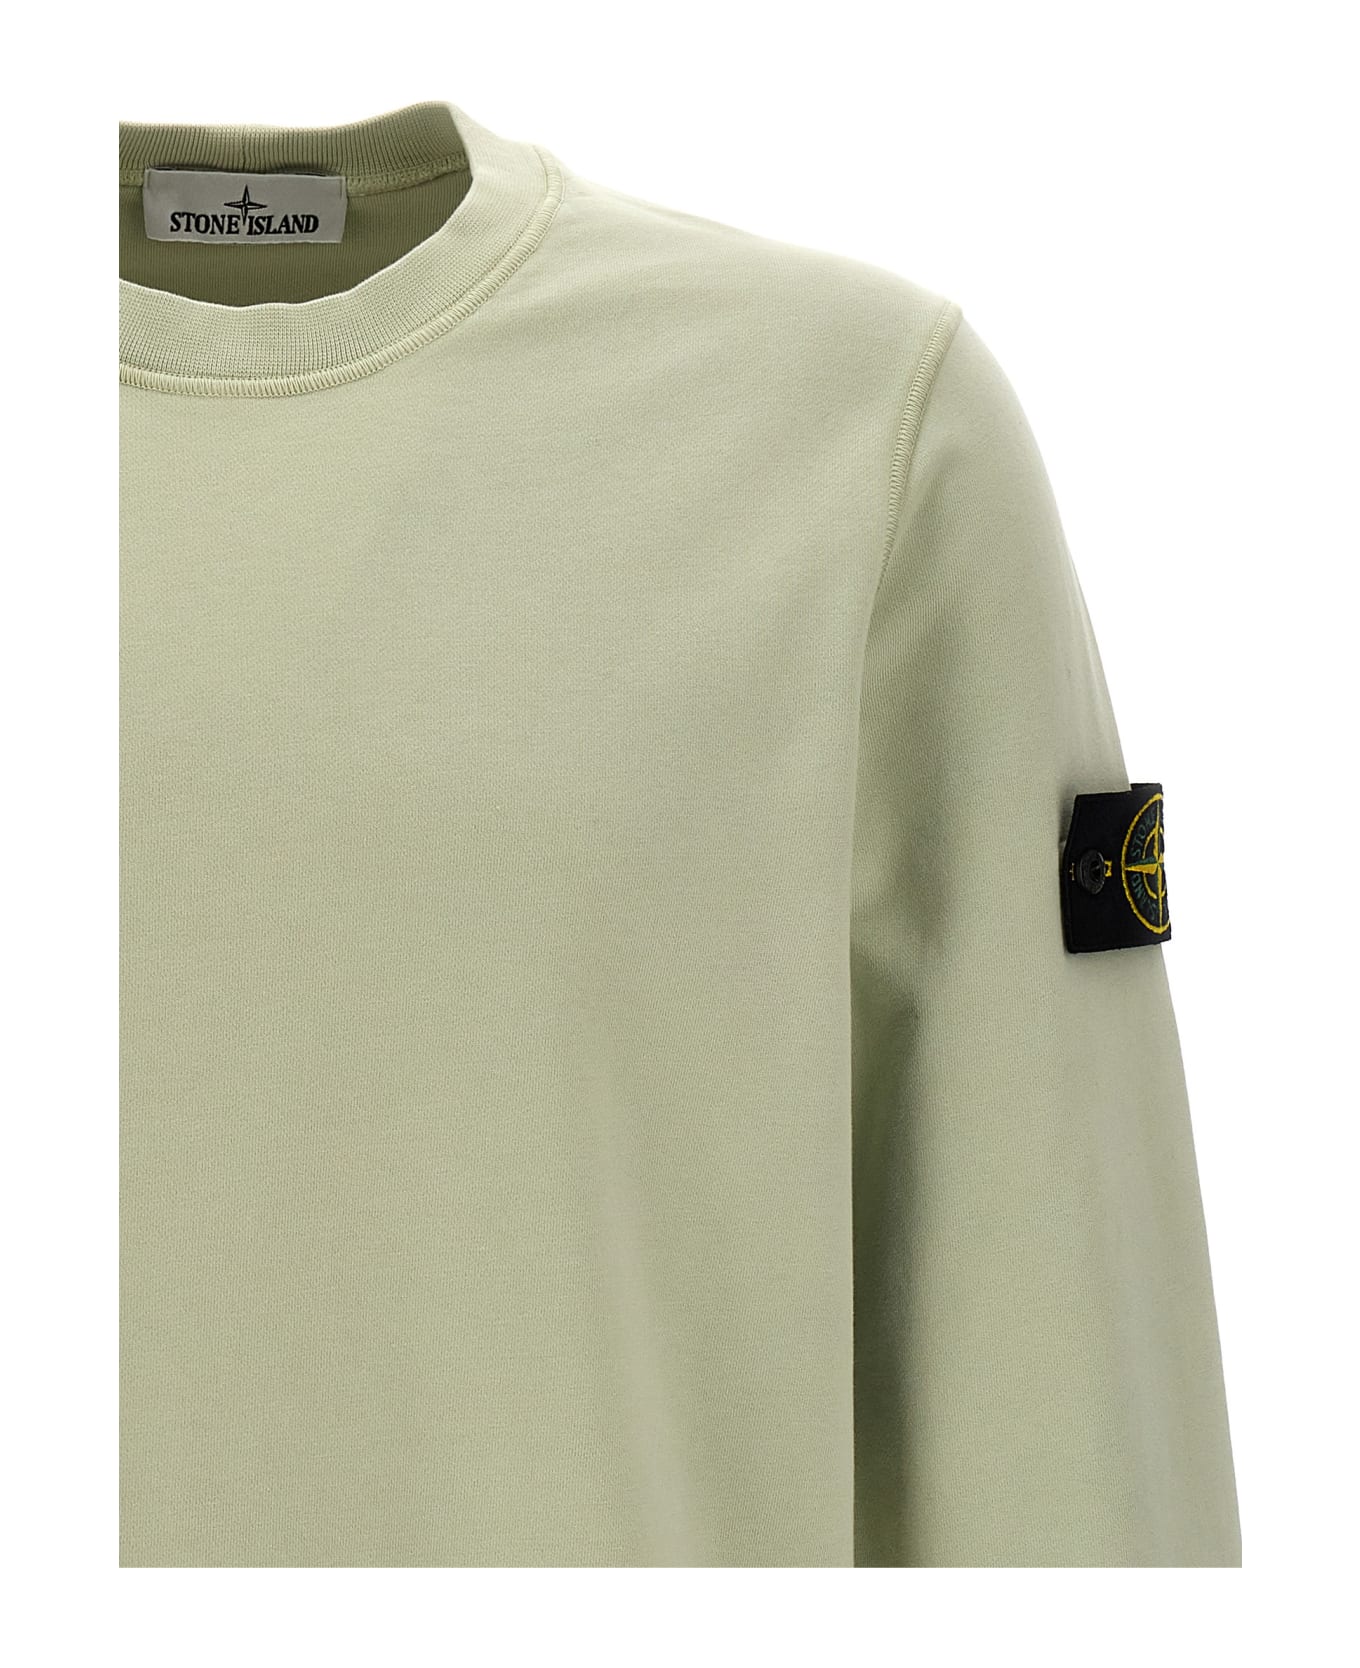 Stone Island Sweatshirt With Logo - Green フリース